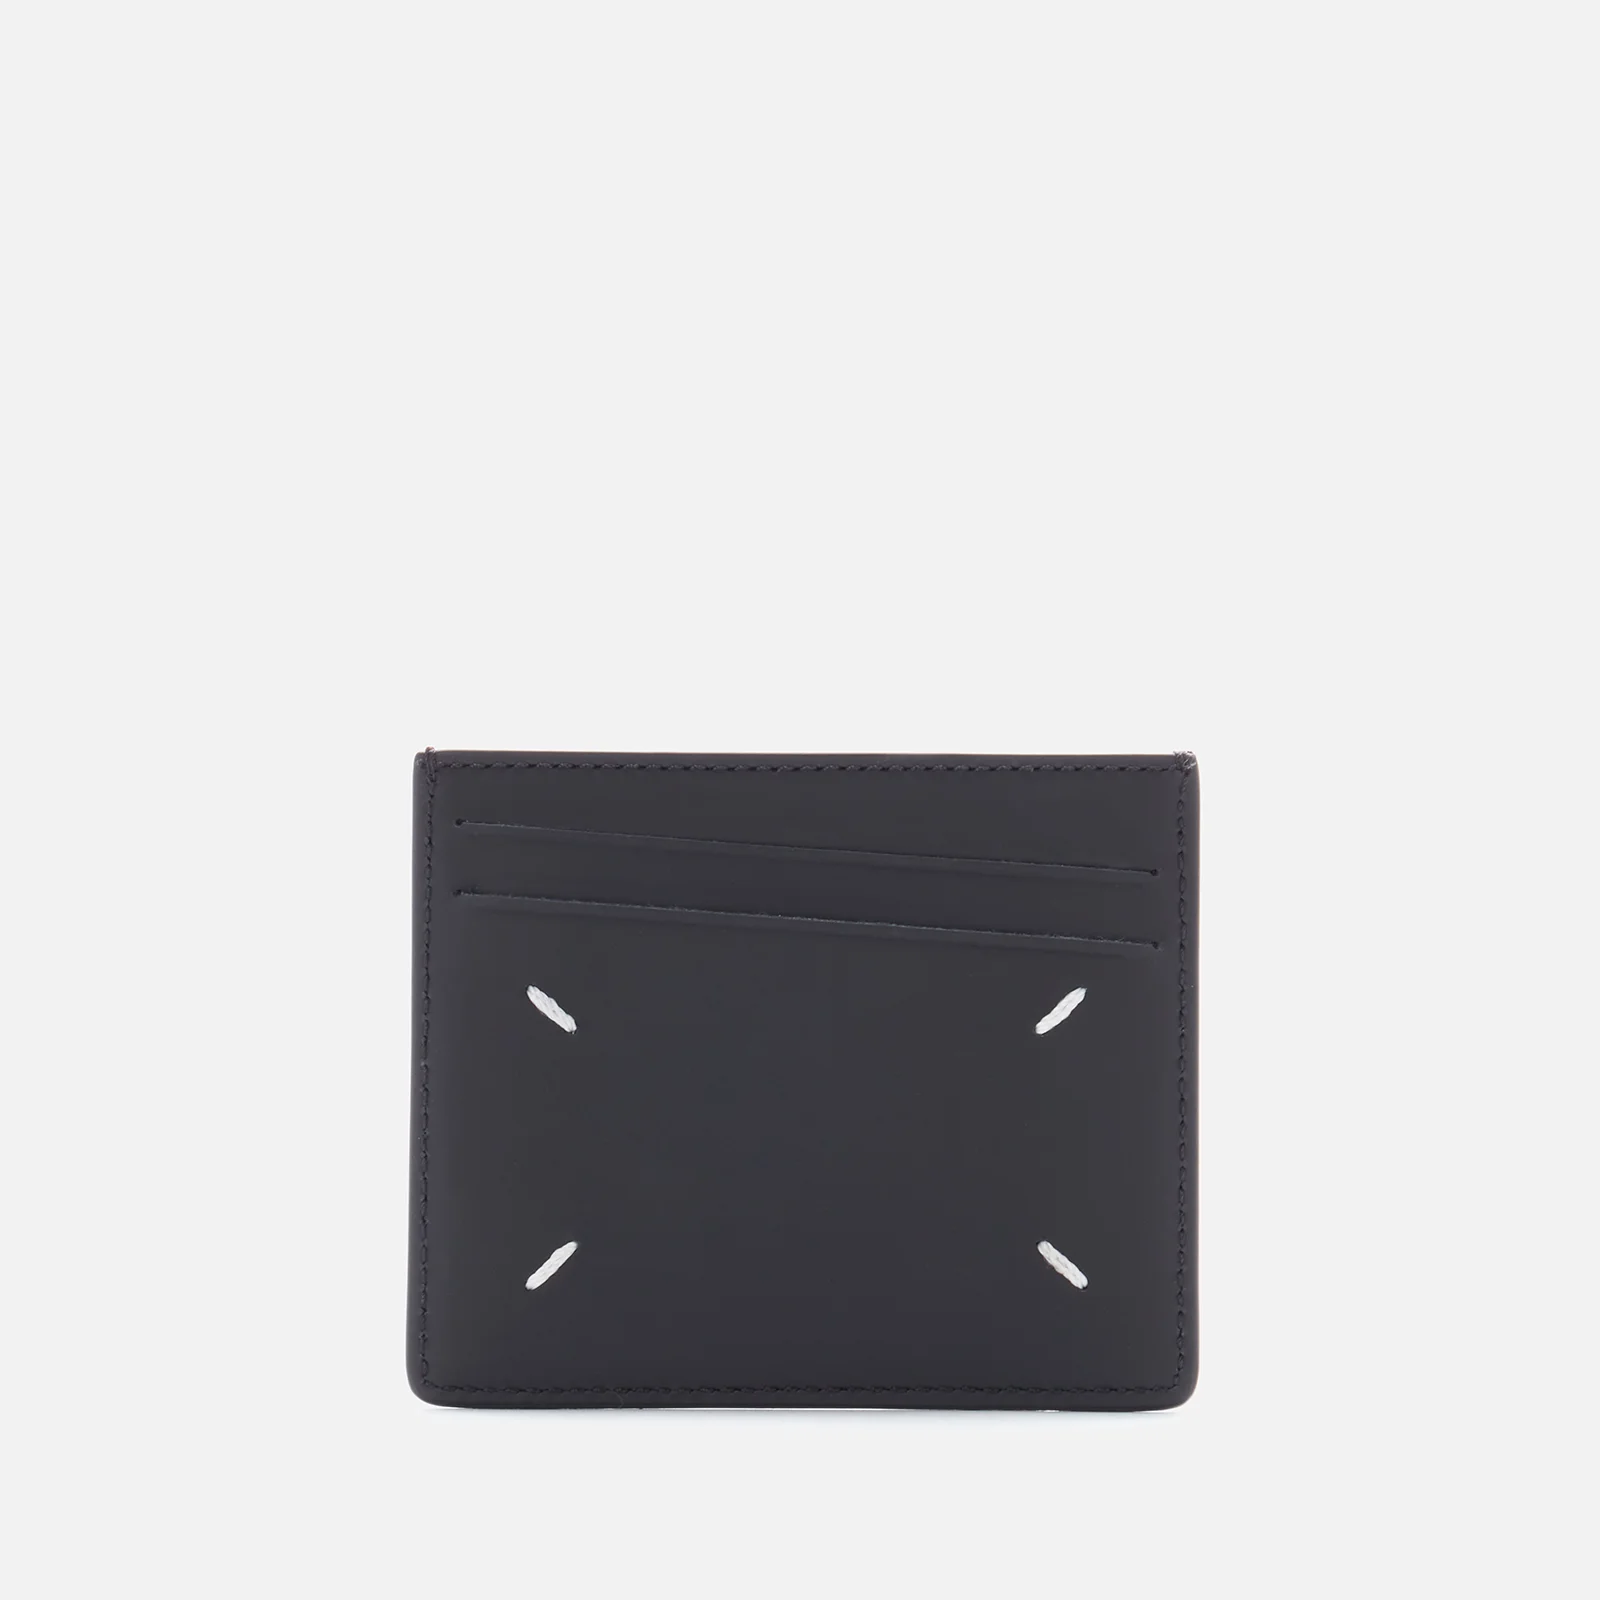 Maison Margiela Men's Leather Credit Card Case - Brown Image 1